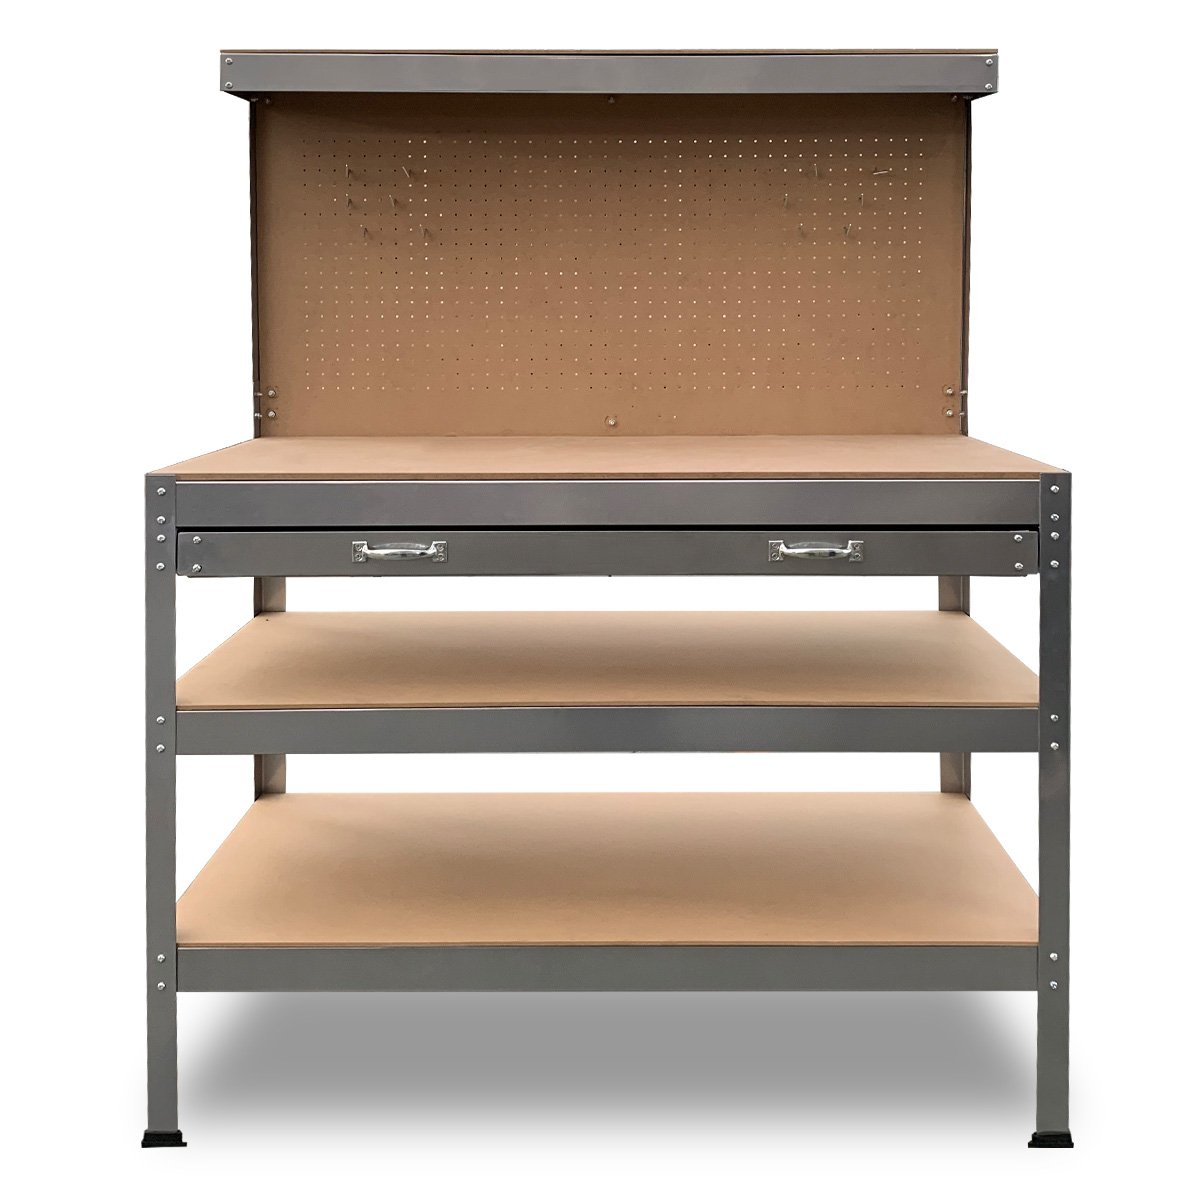 3-Layered Work Bench Garage Storage Table Tool Shop Shelf Silver 2